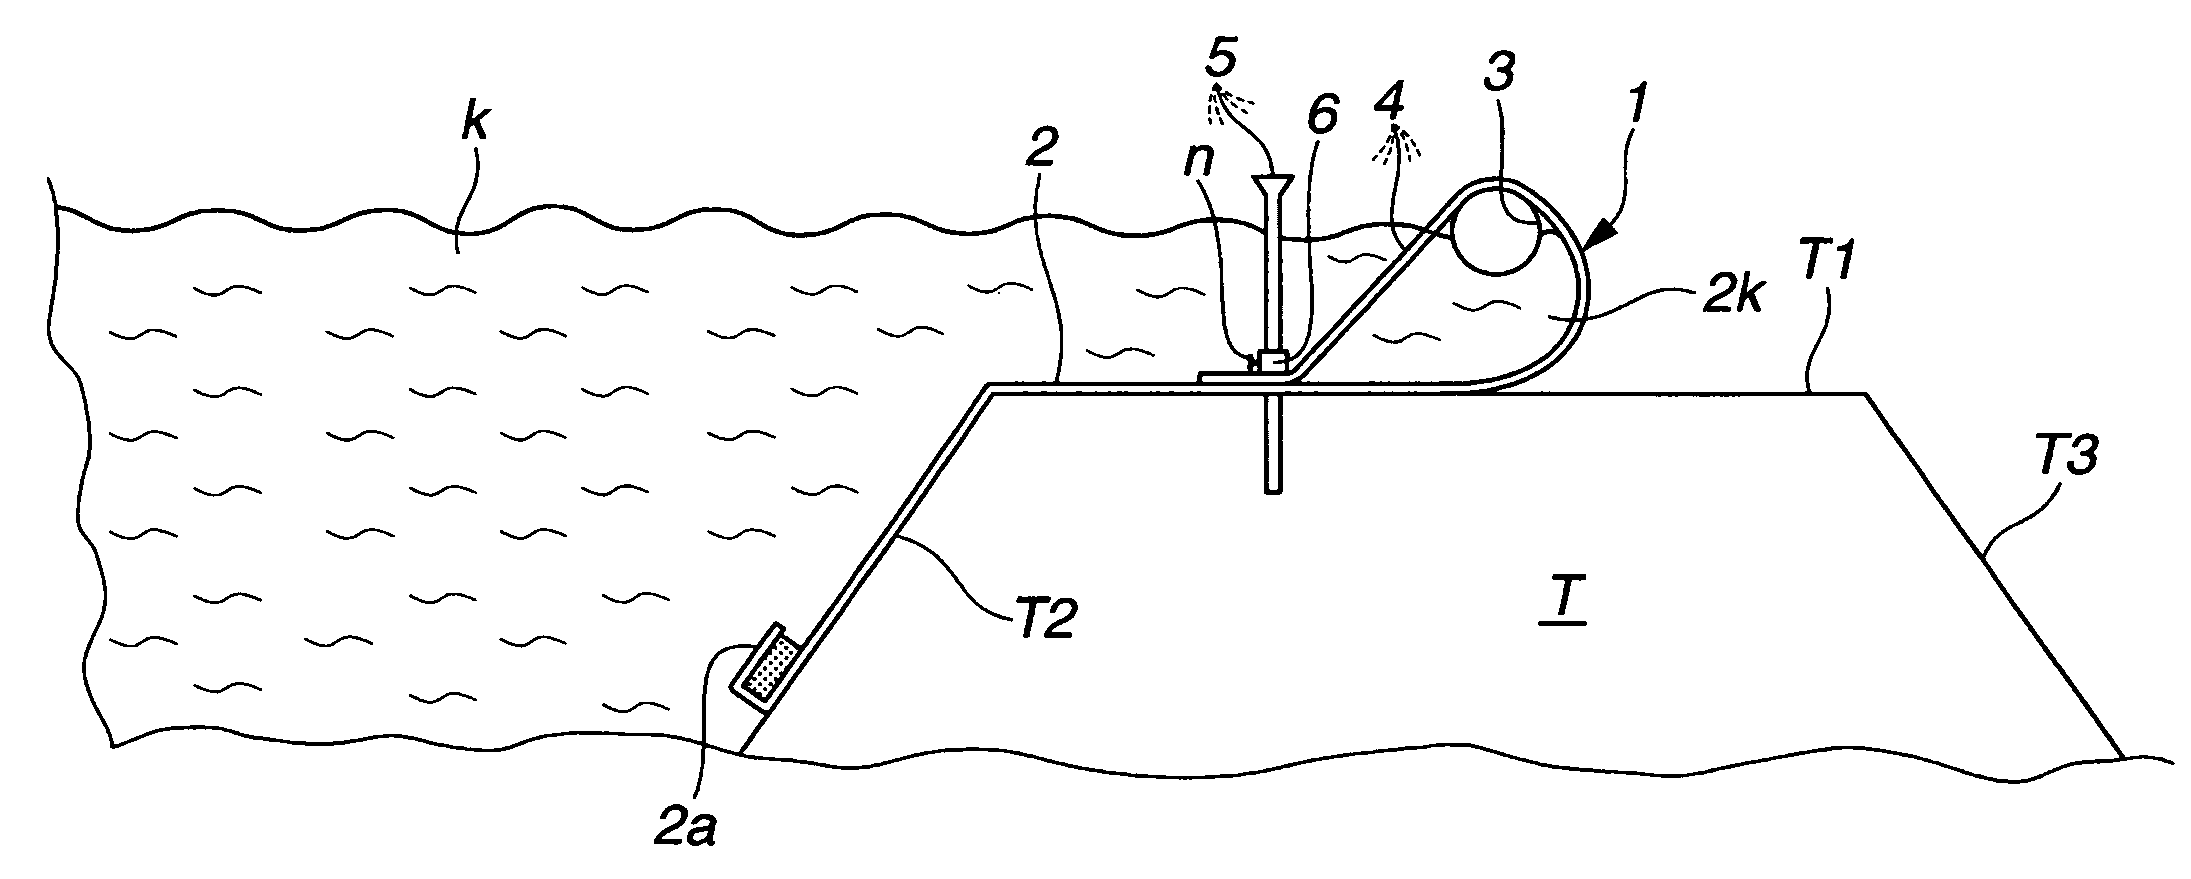 Floating levee sheet